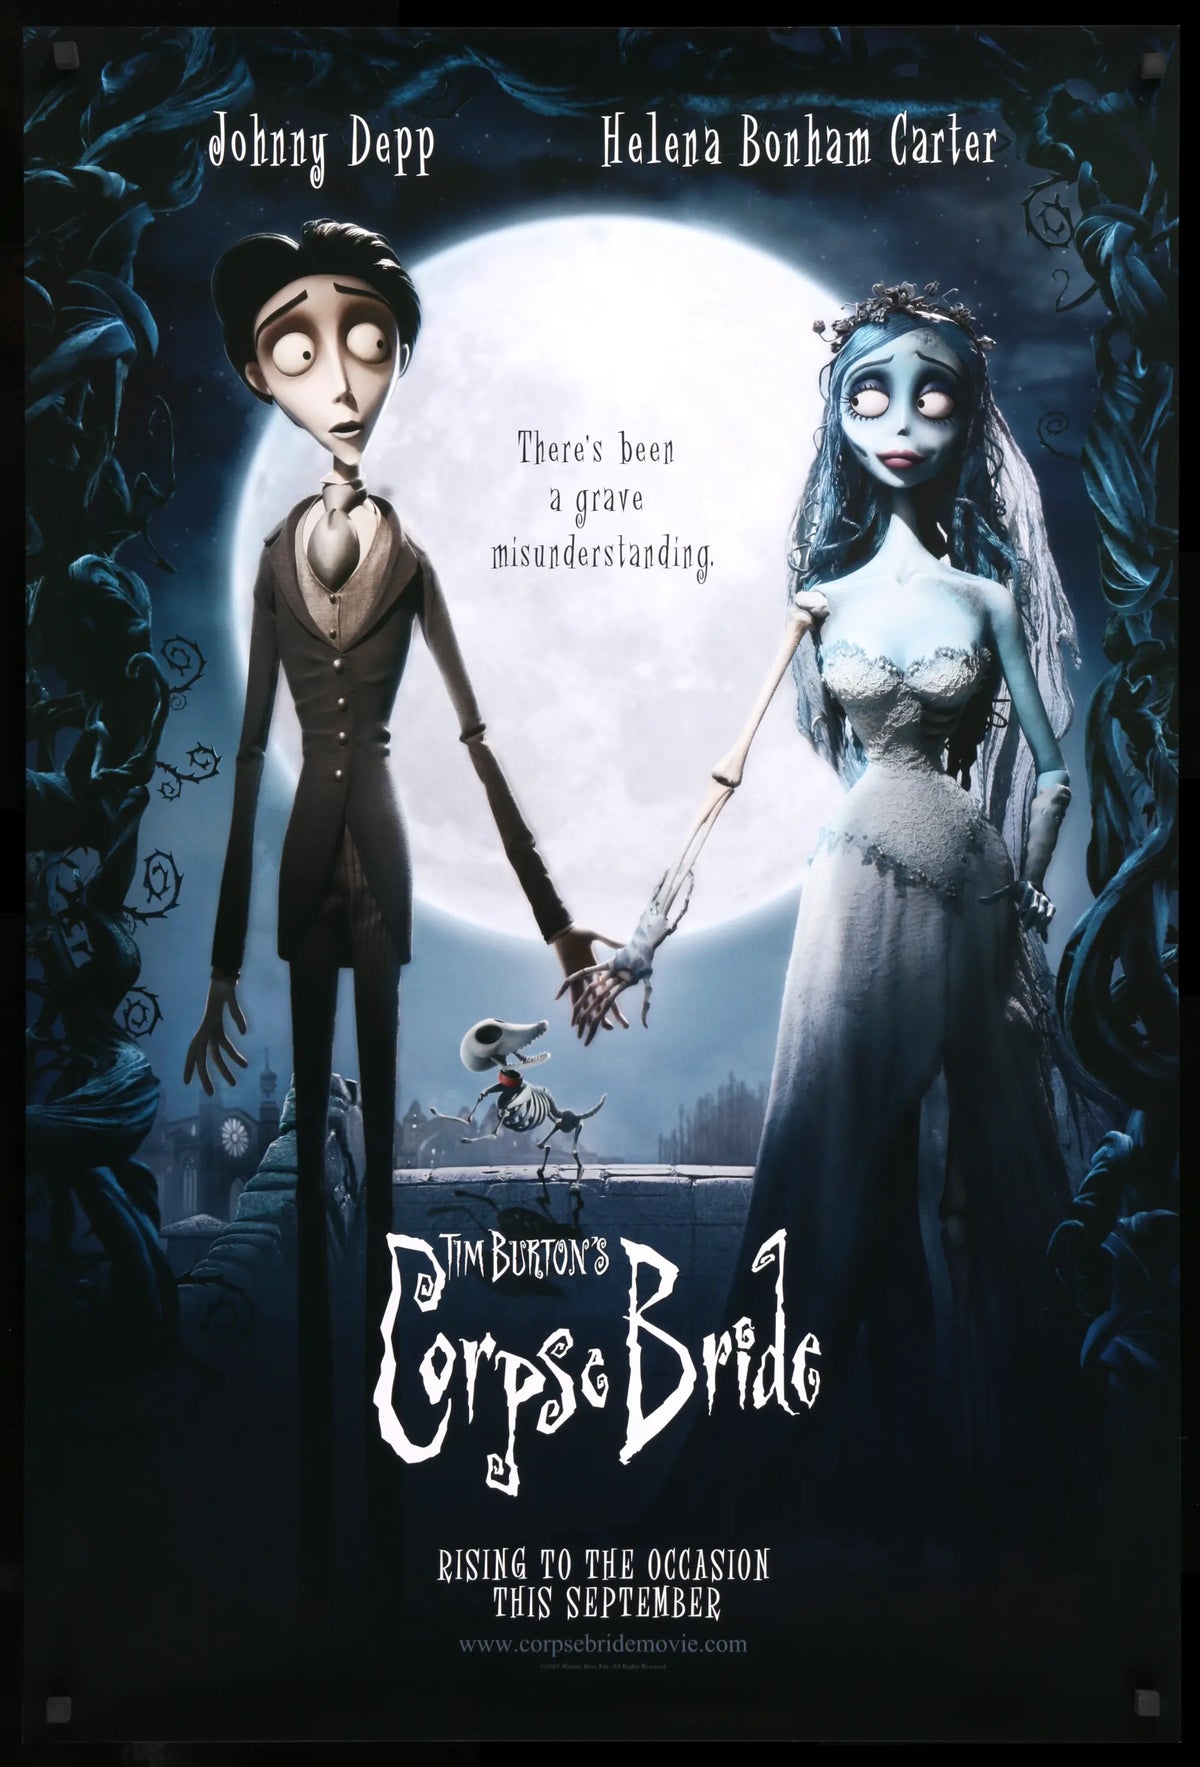 Corpse Bride (2005) original movie poster for sale at Original Film Art